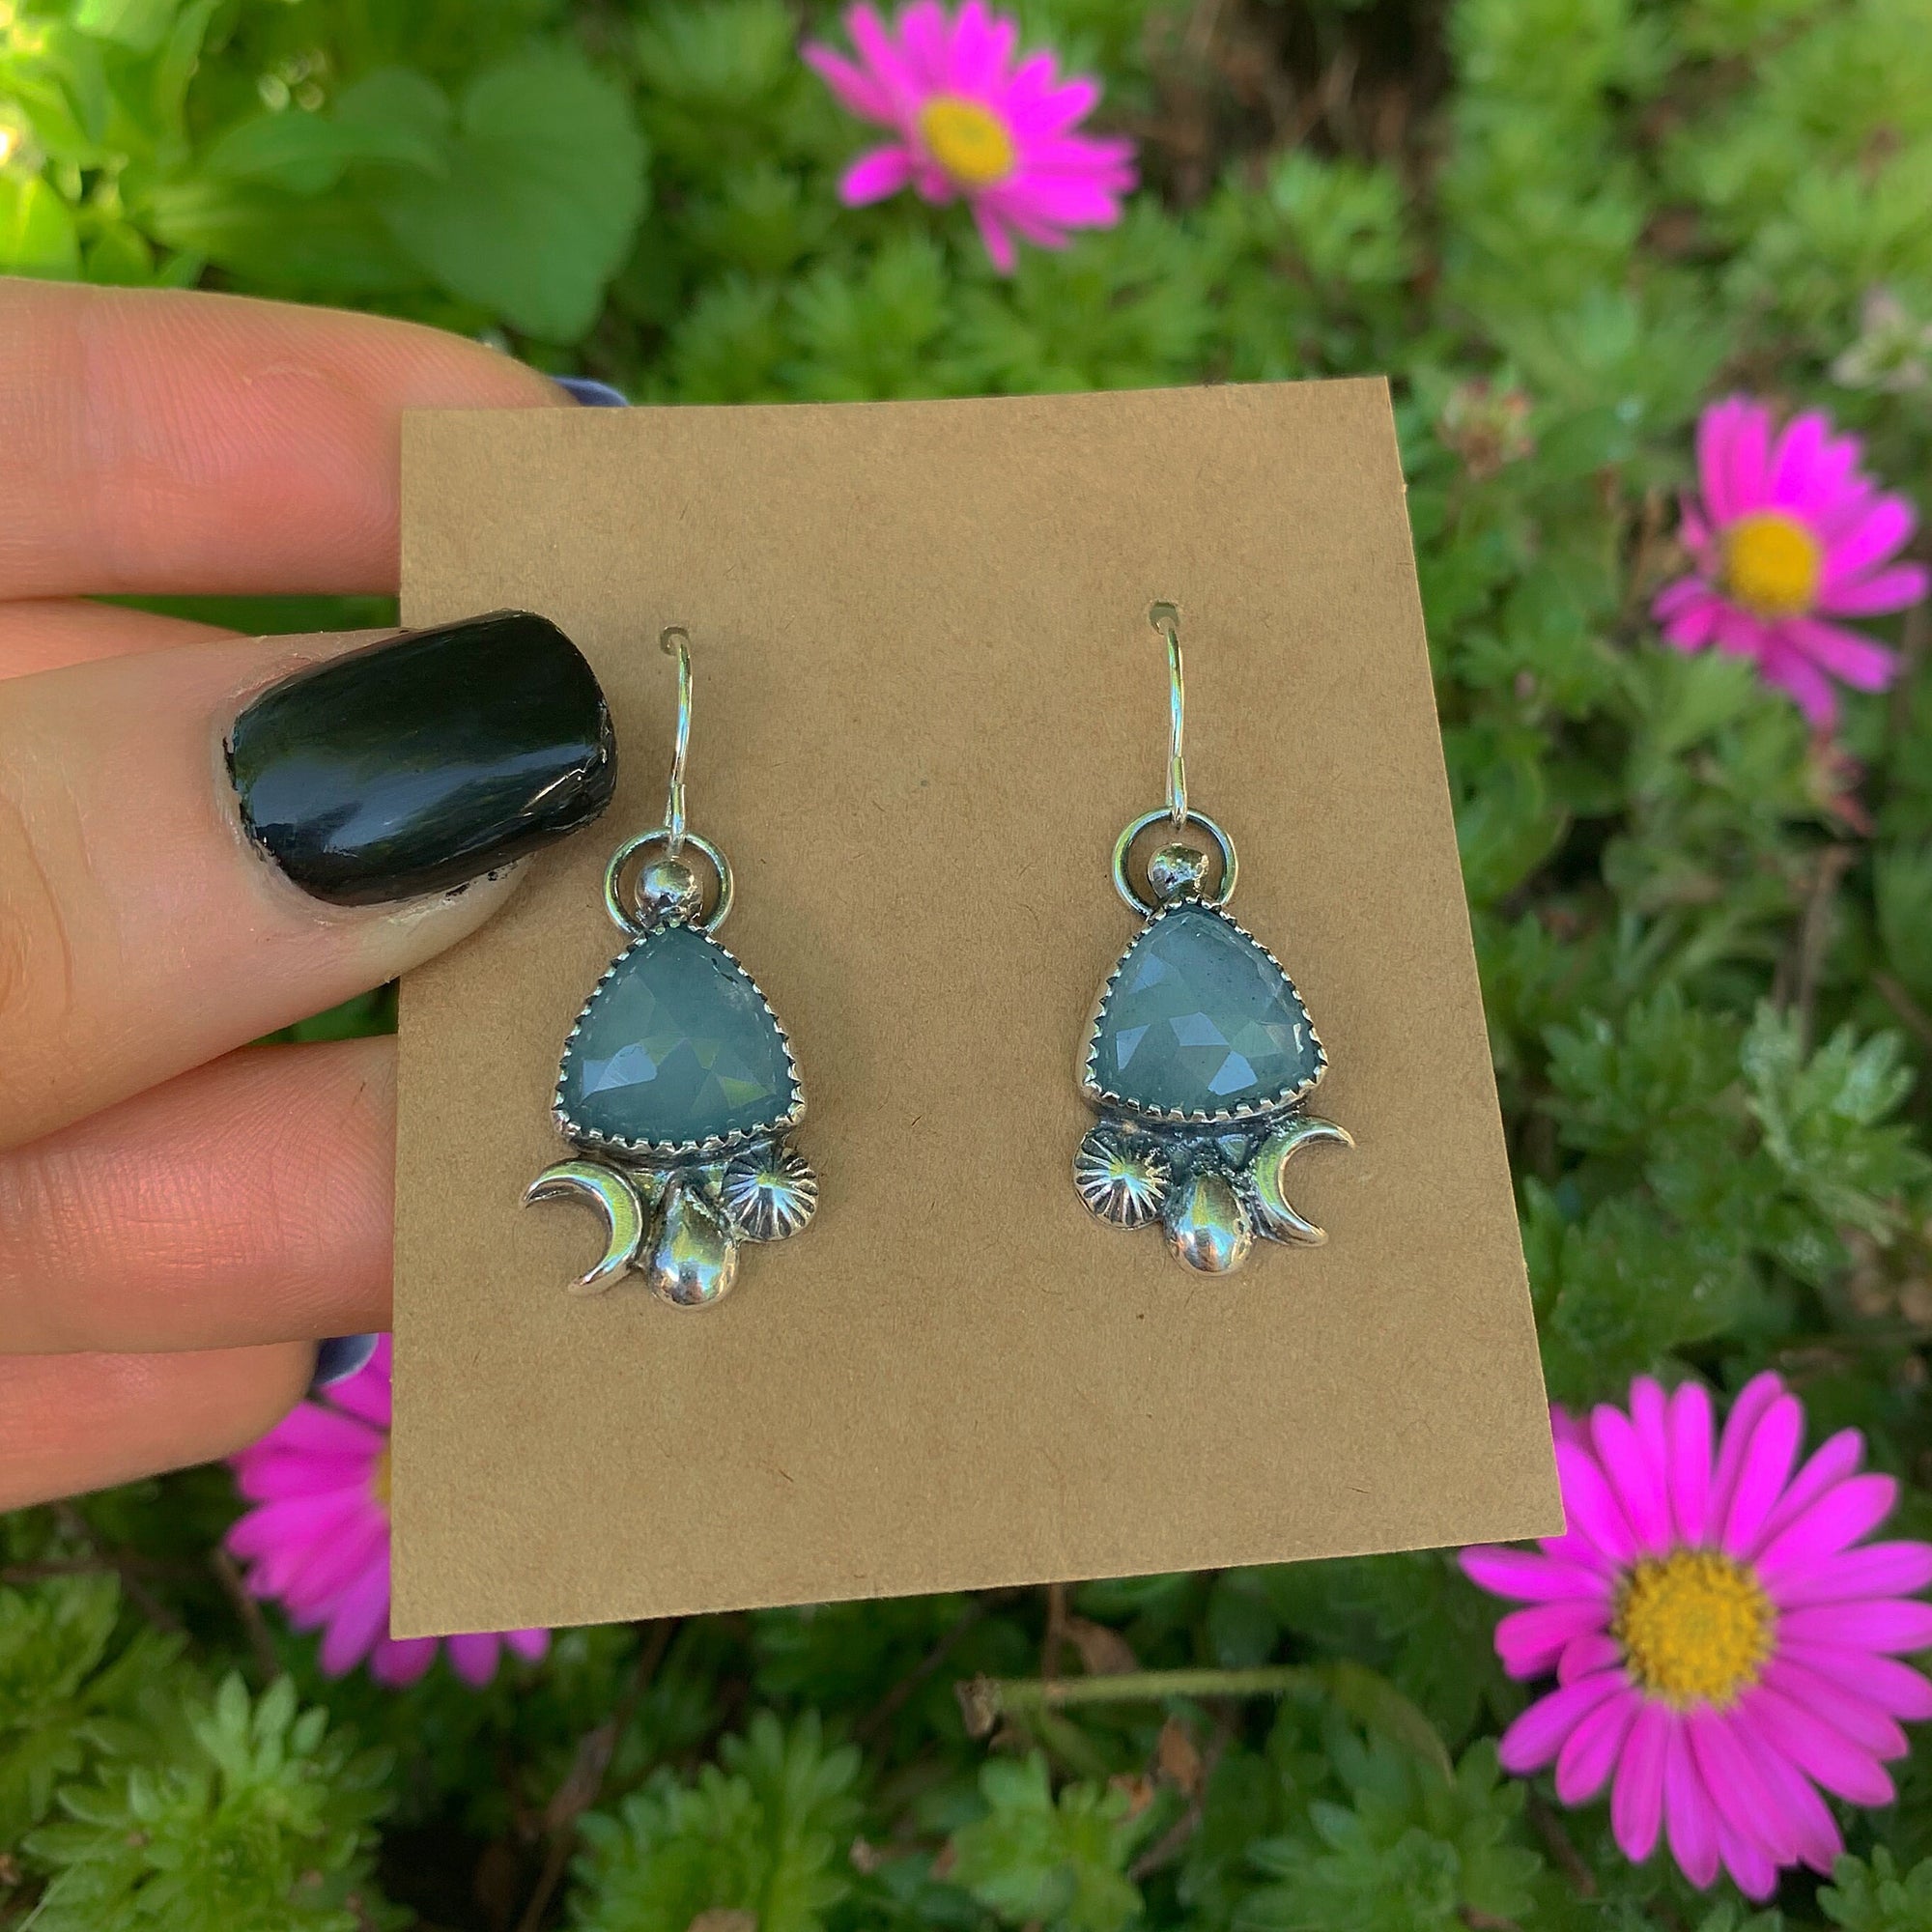 Rose Cut Aquamarine Earrings - Sterling Silver - Blue Aquamarine Moon Earrings - Ocean Earrings - Water Earrings, Faceted Aquamarine Dangles